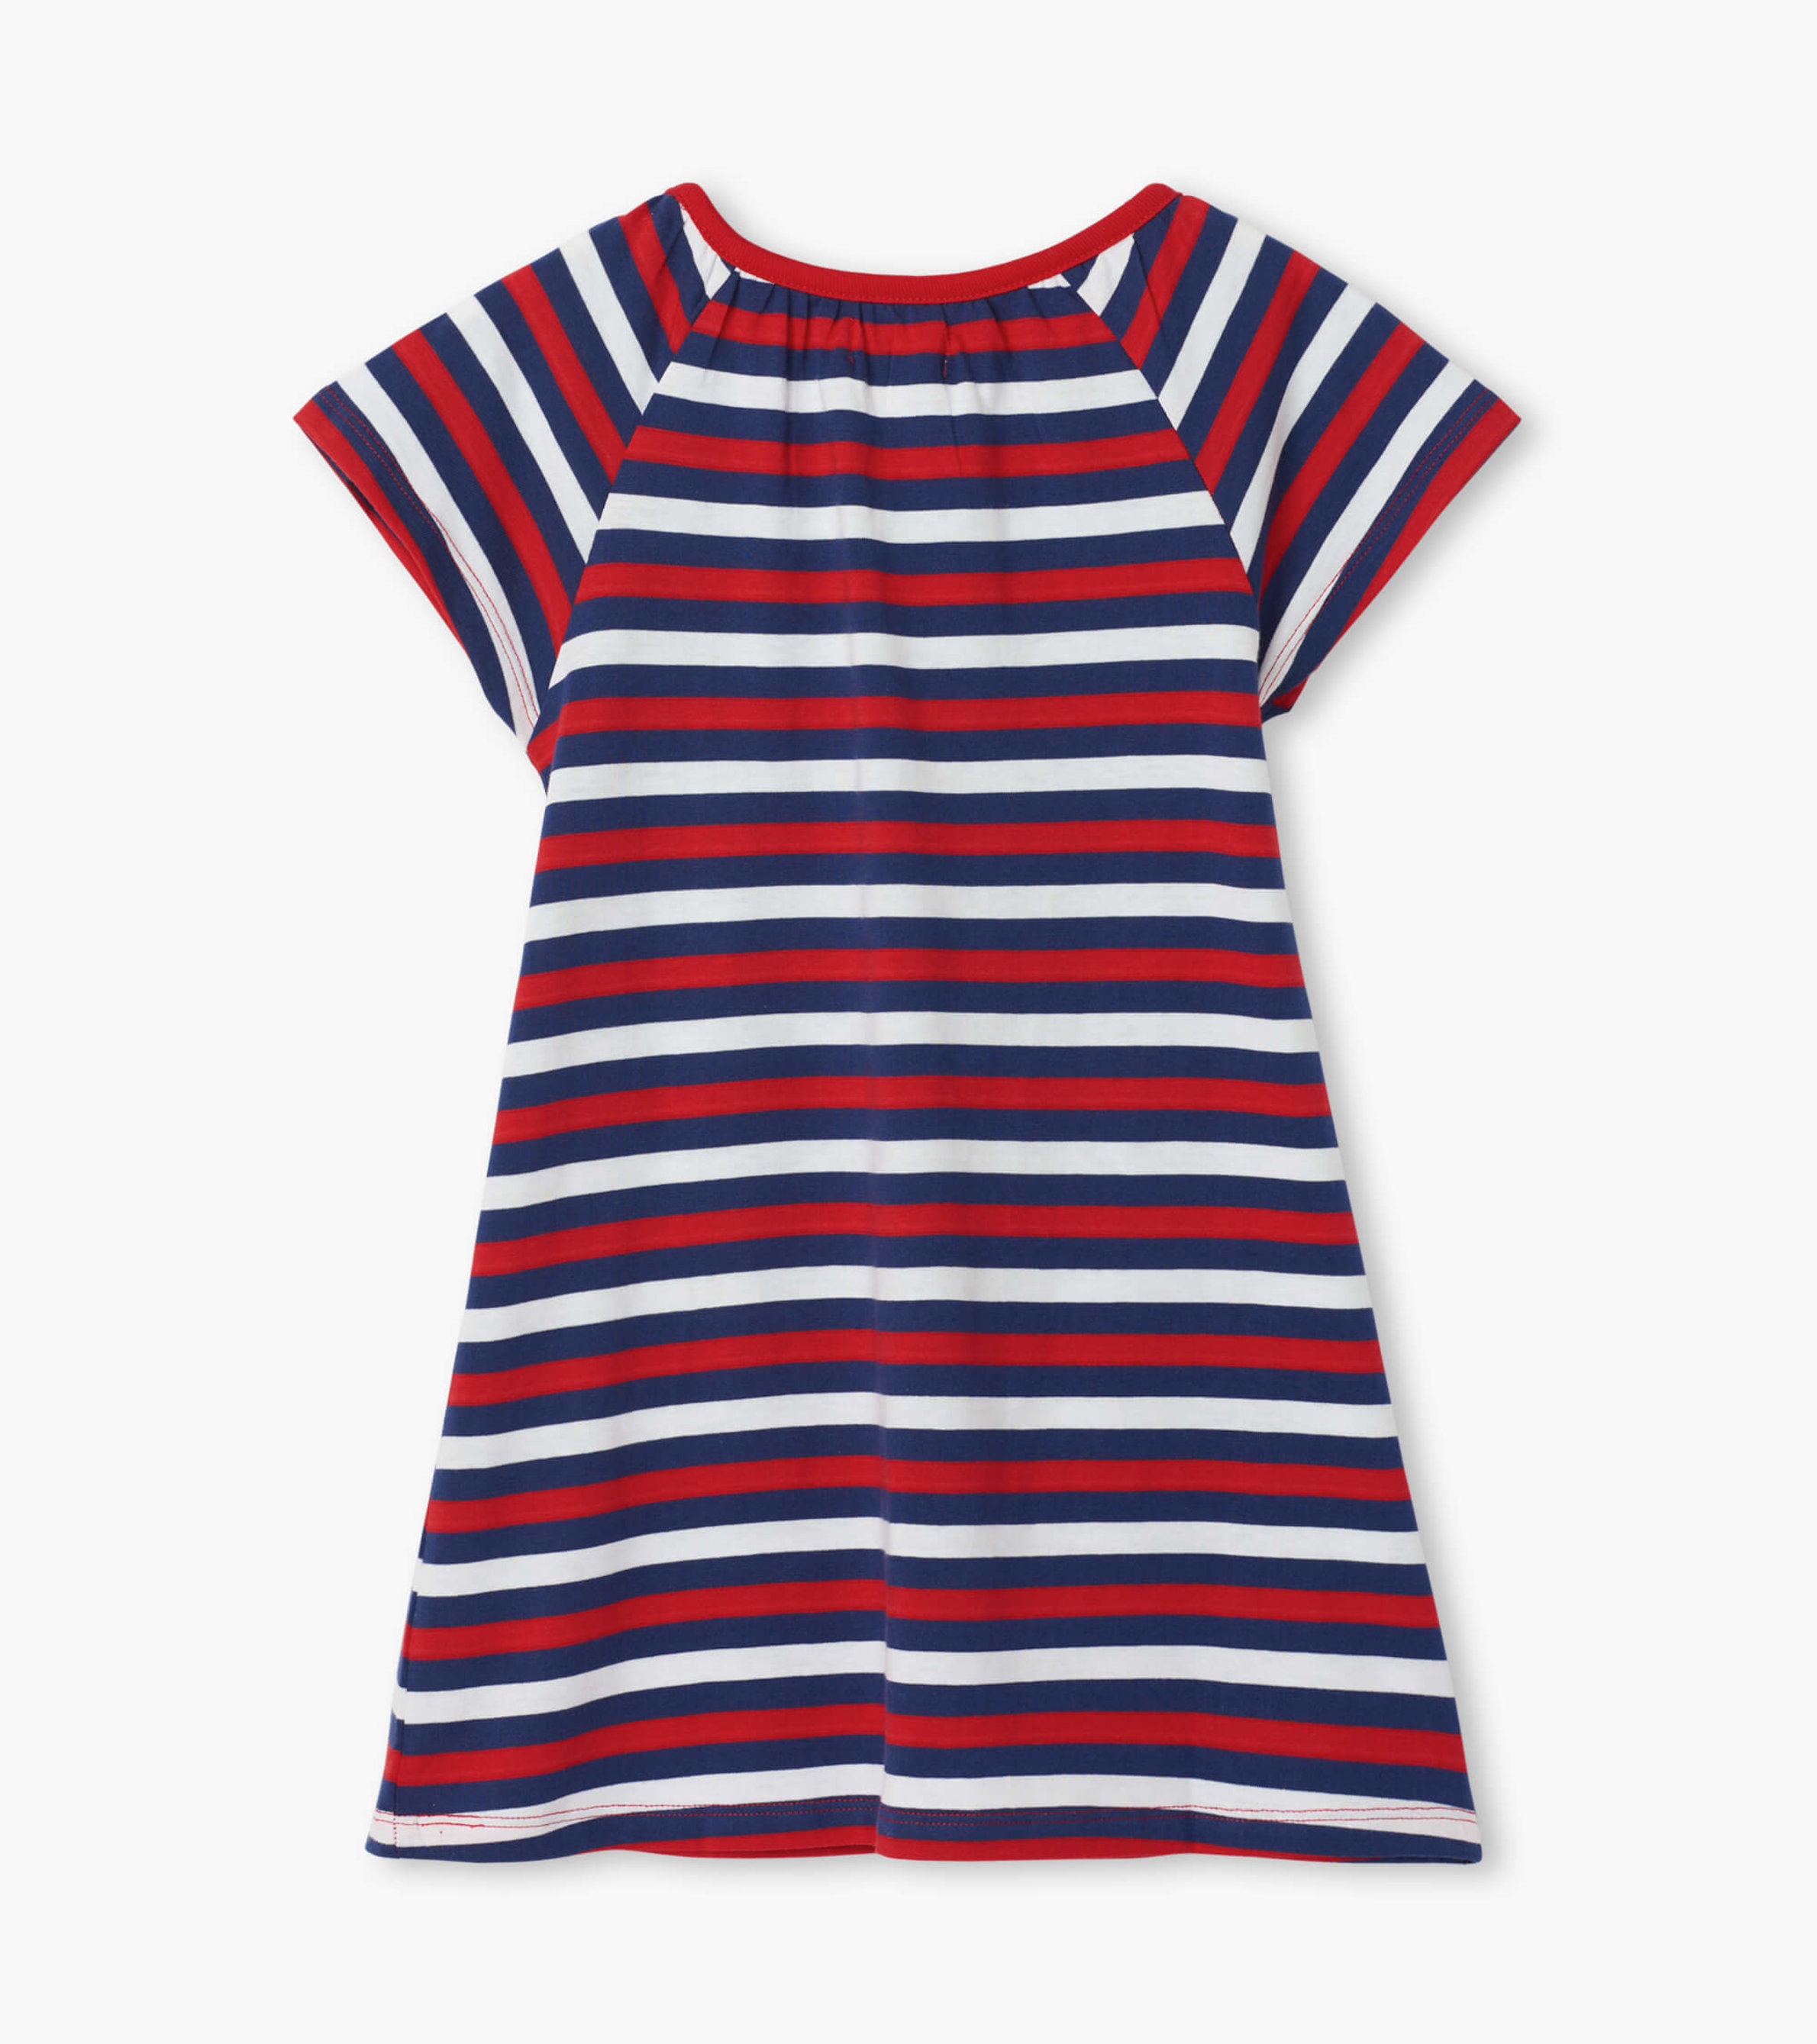 Nautical Stripe Tee Shirt Dress - Hatley US